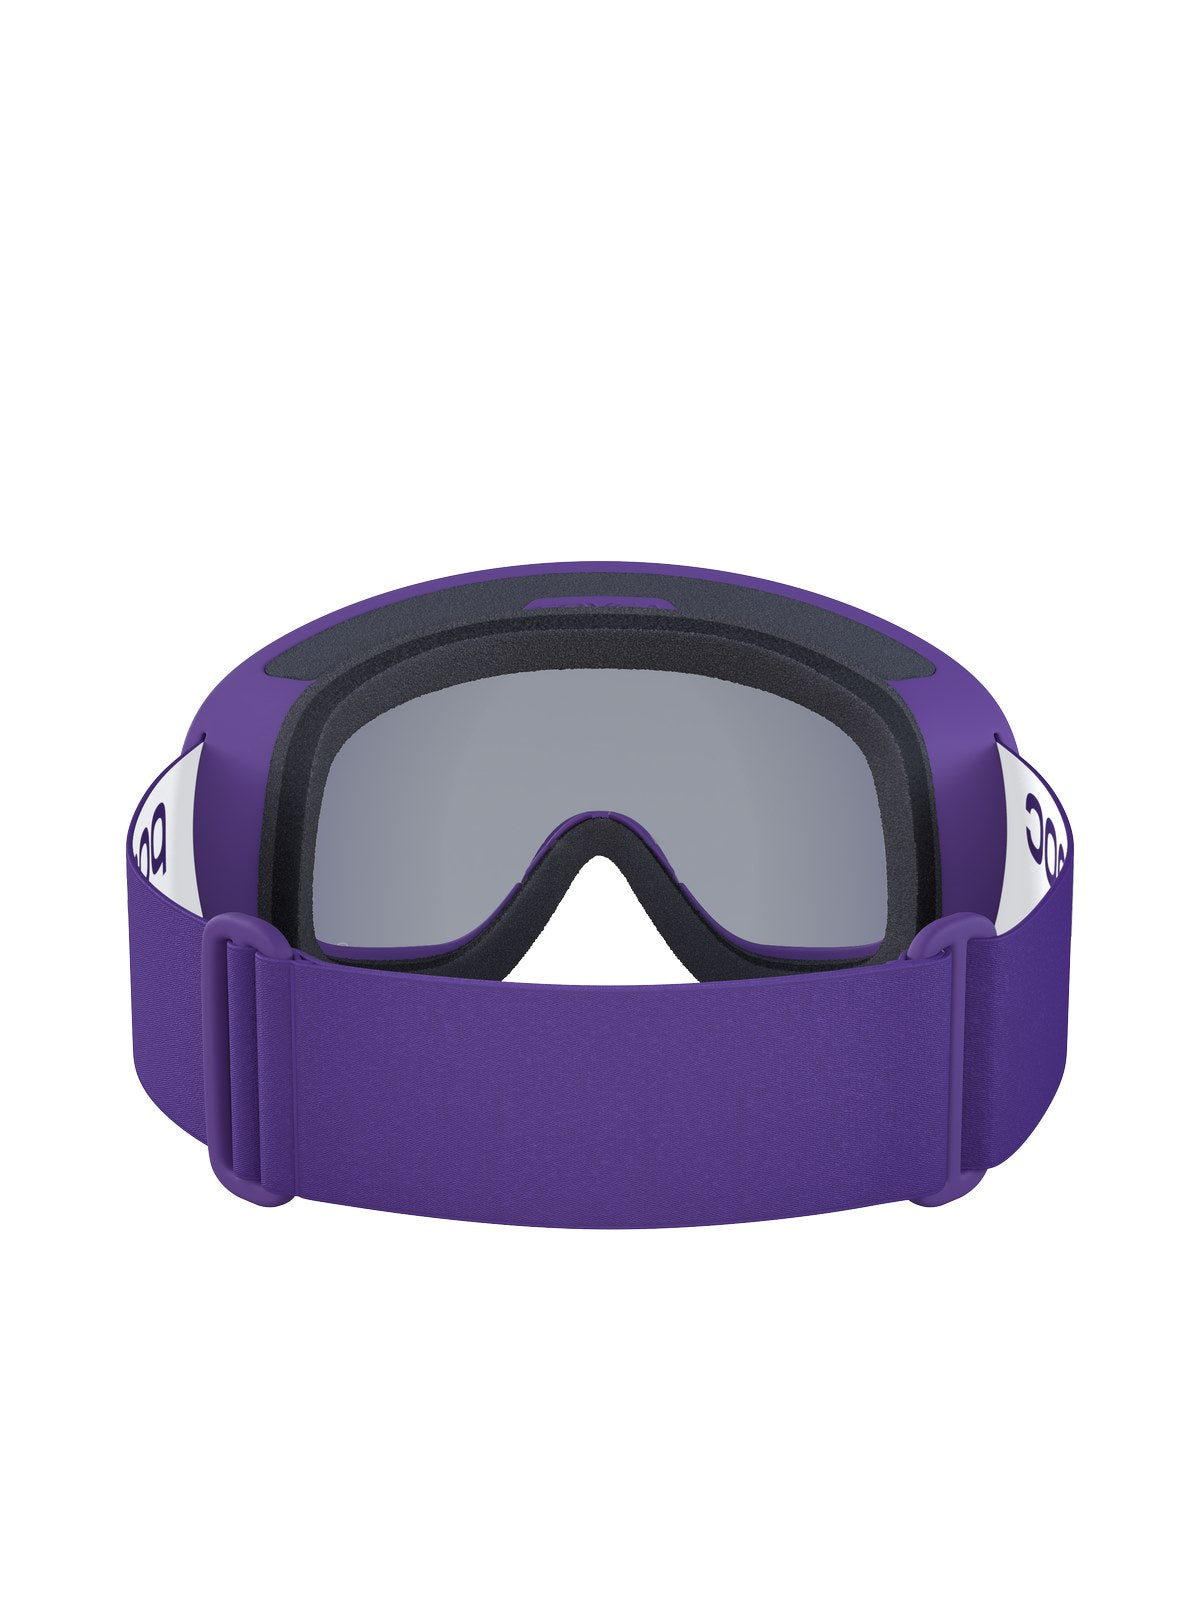 Gogle narciarskie POC Fovea Mid Clarity Define/Spektris Ivory Cat 2 - Sap. Purple